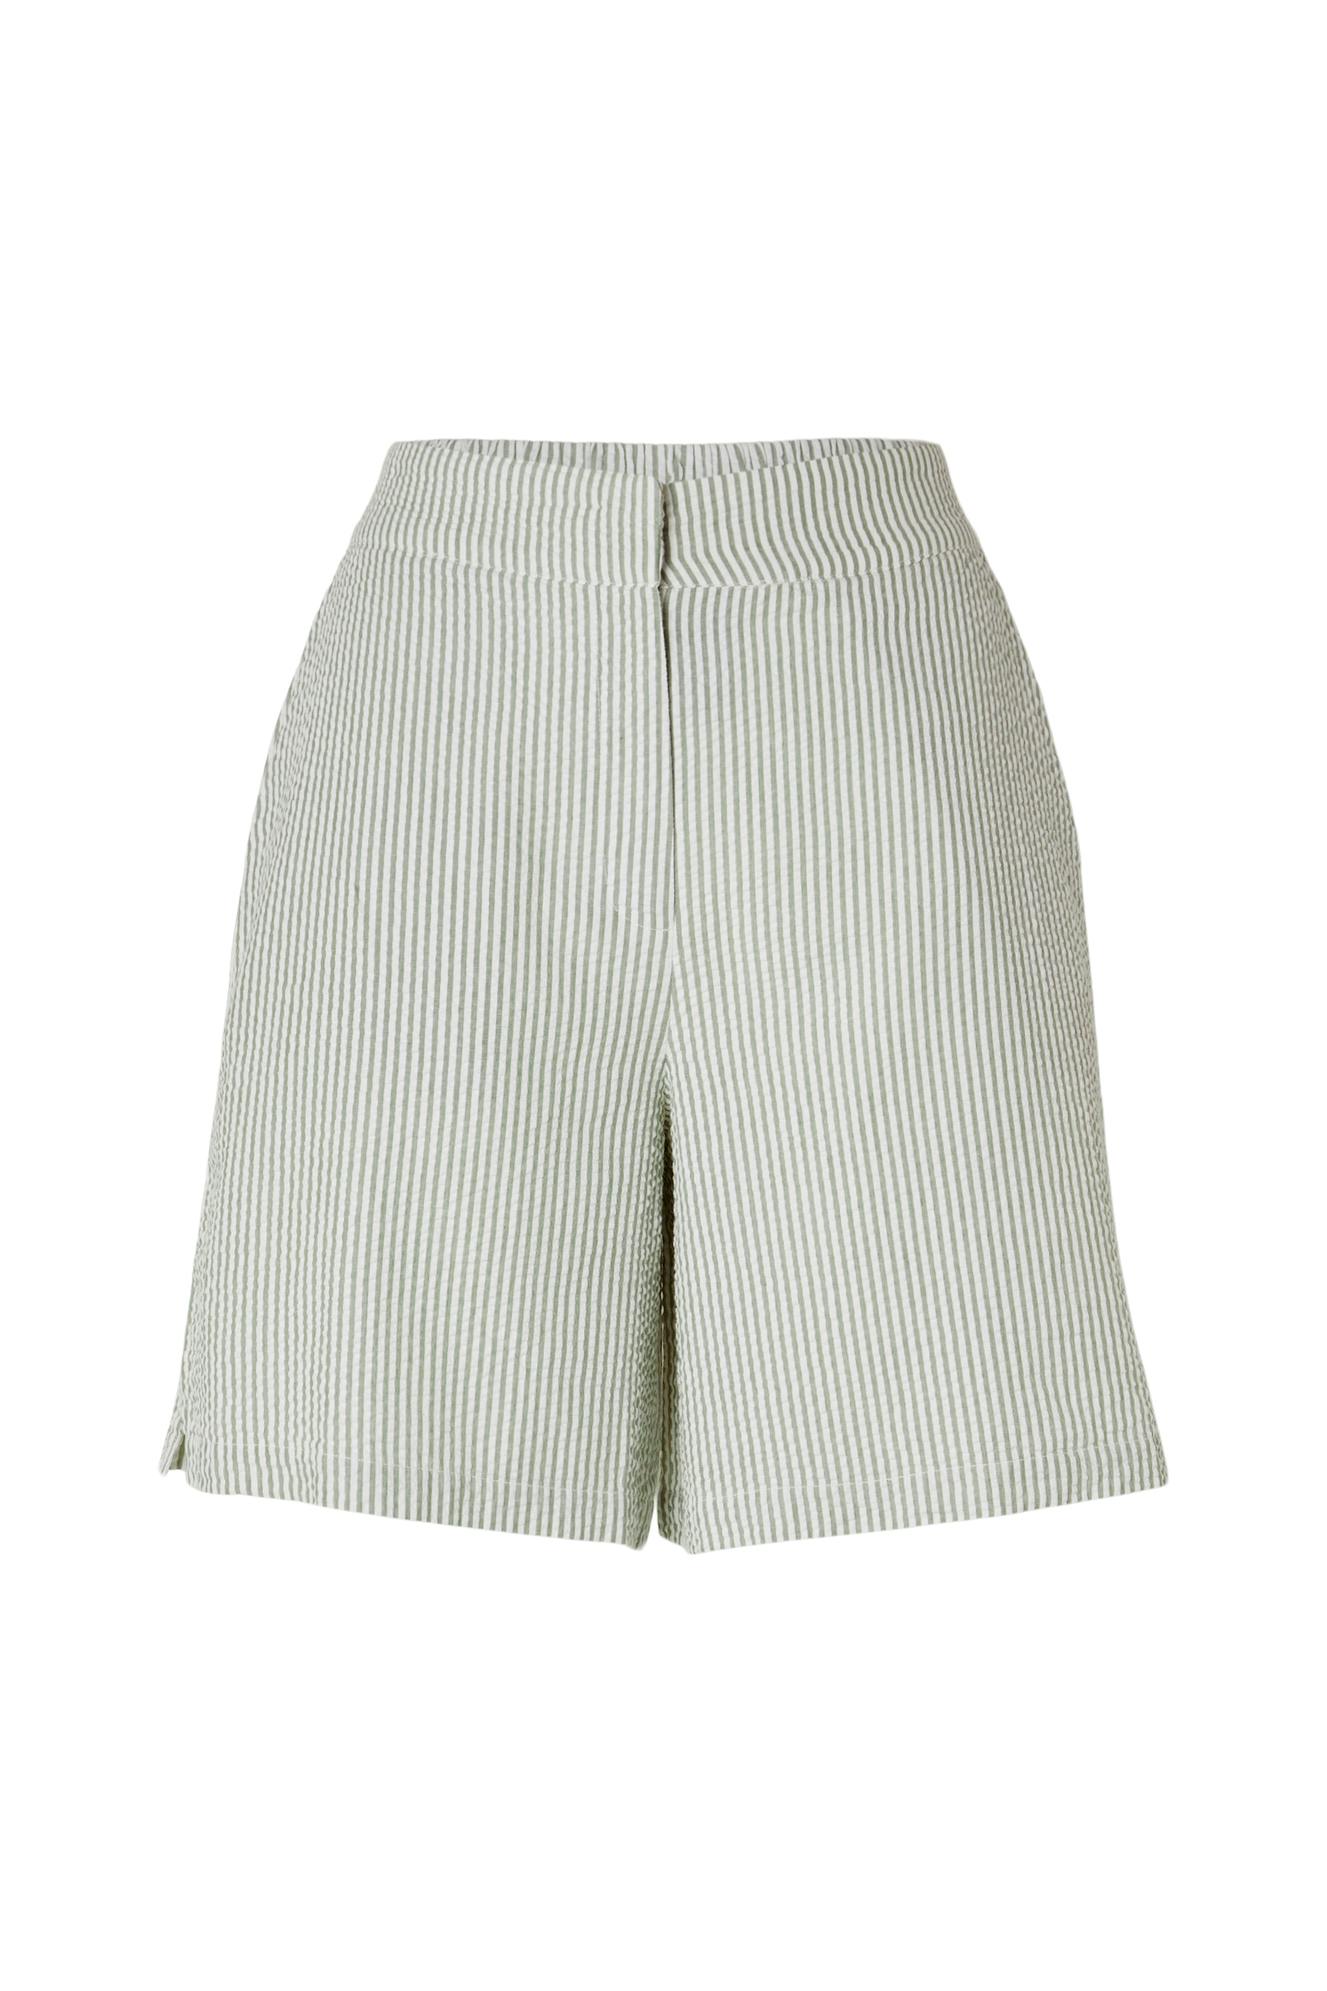 Vittoria HW wide striped shorts